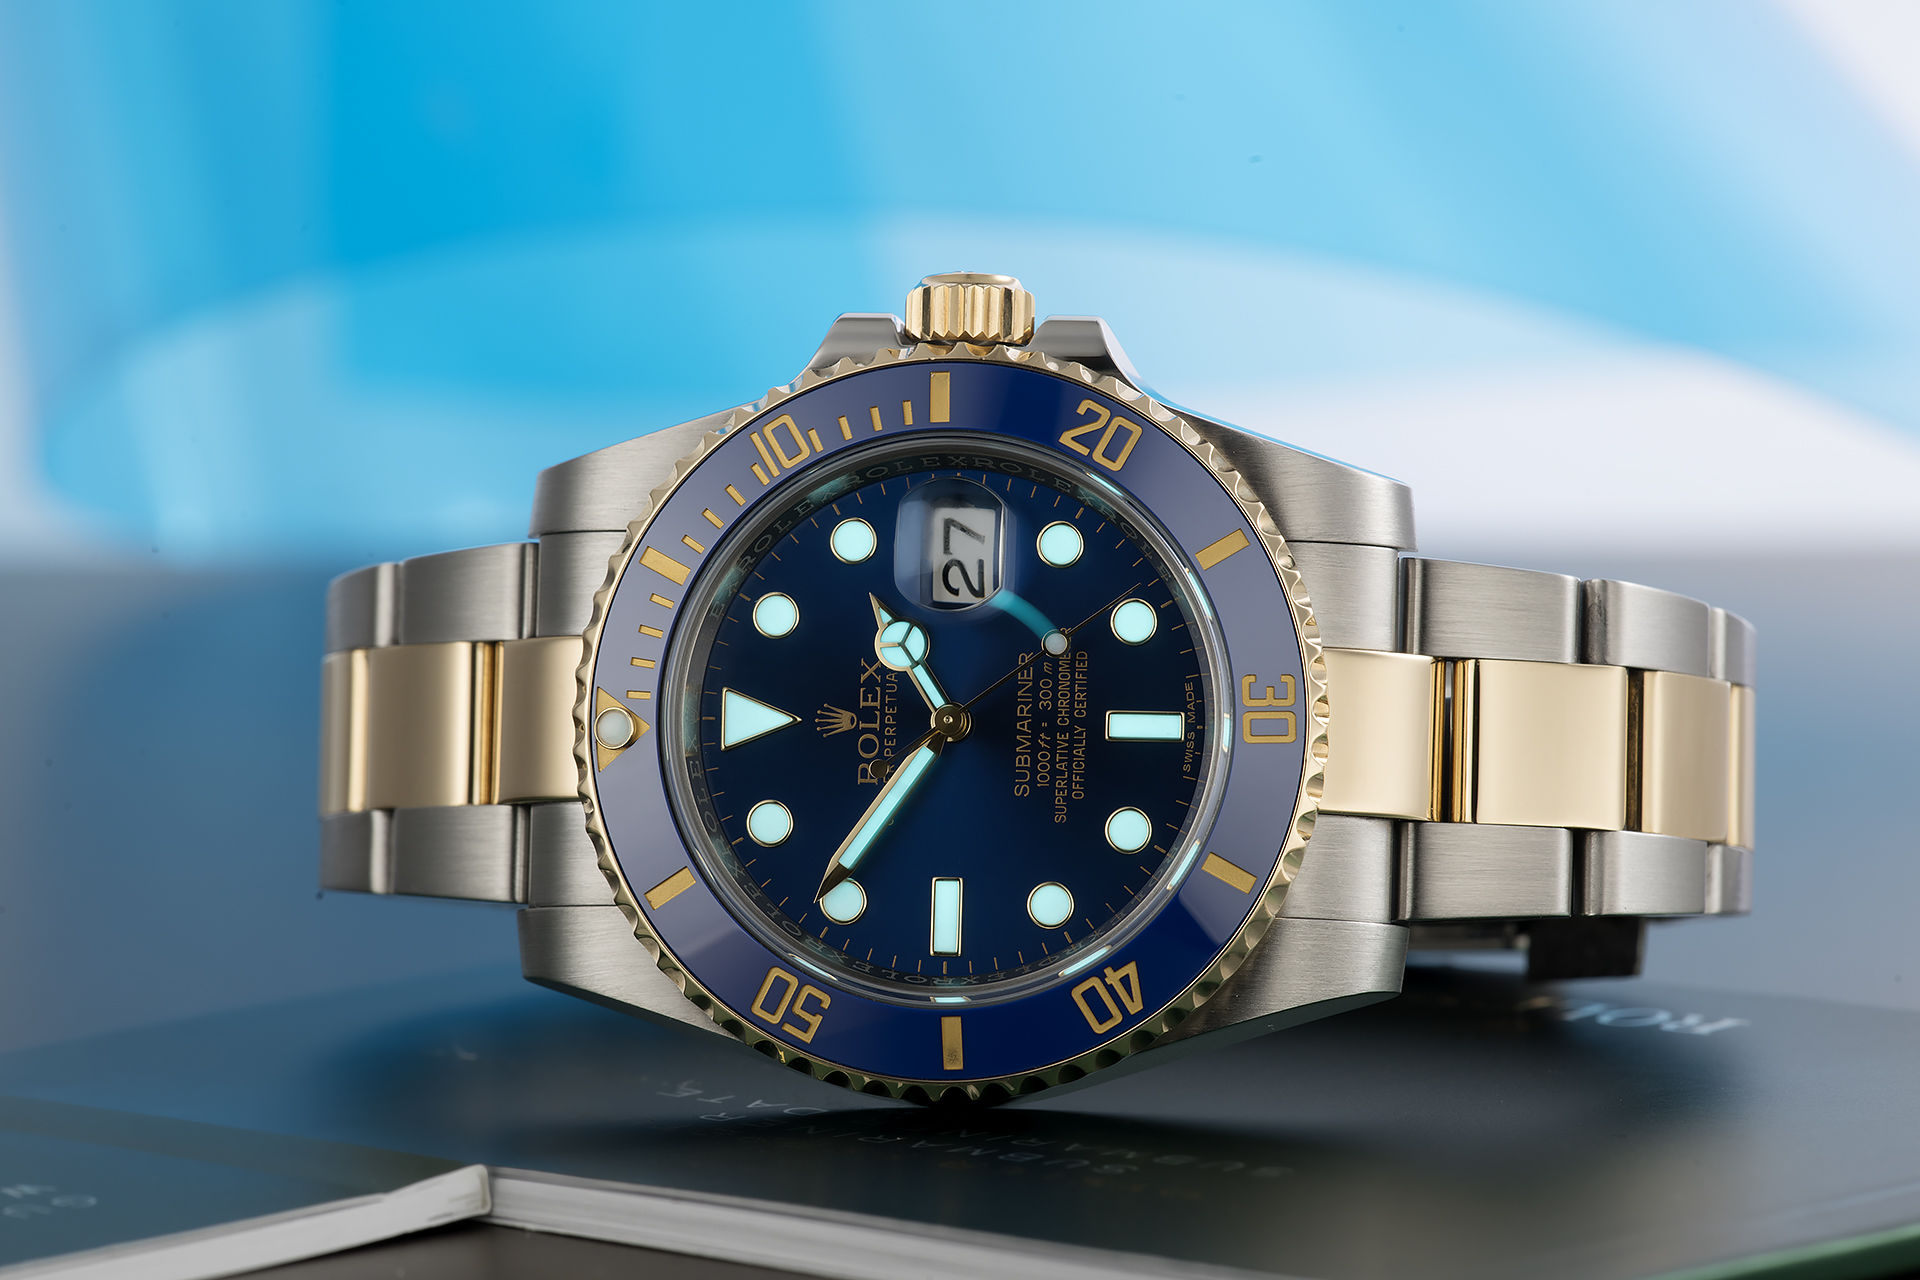 ref 116613LB | Box & Certificate | Rolex Submariner Date